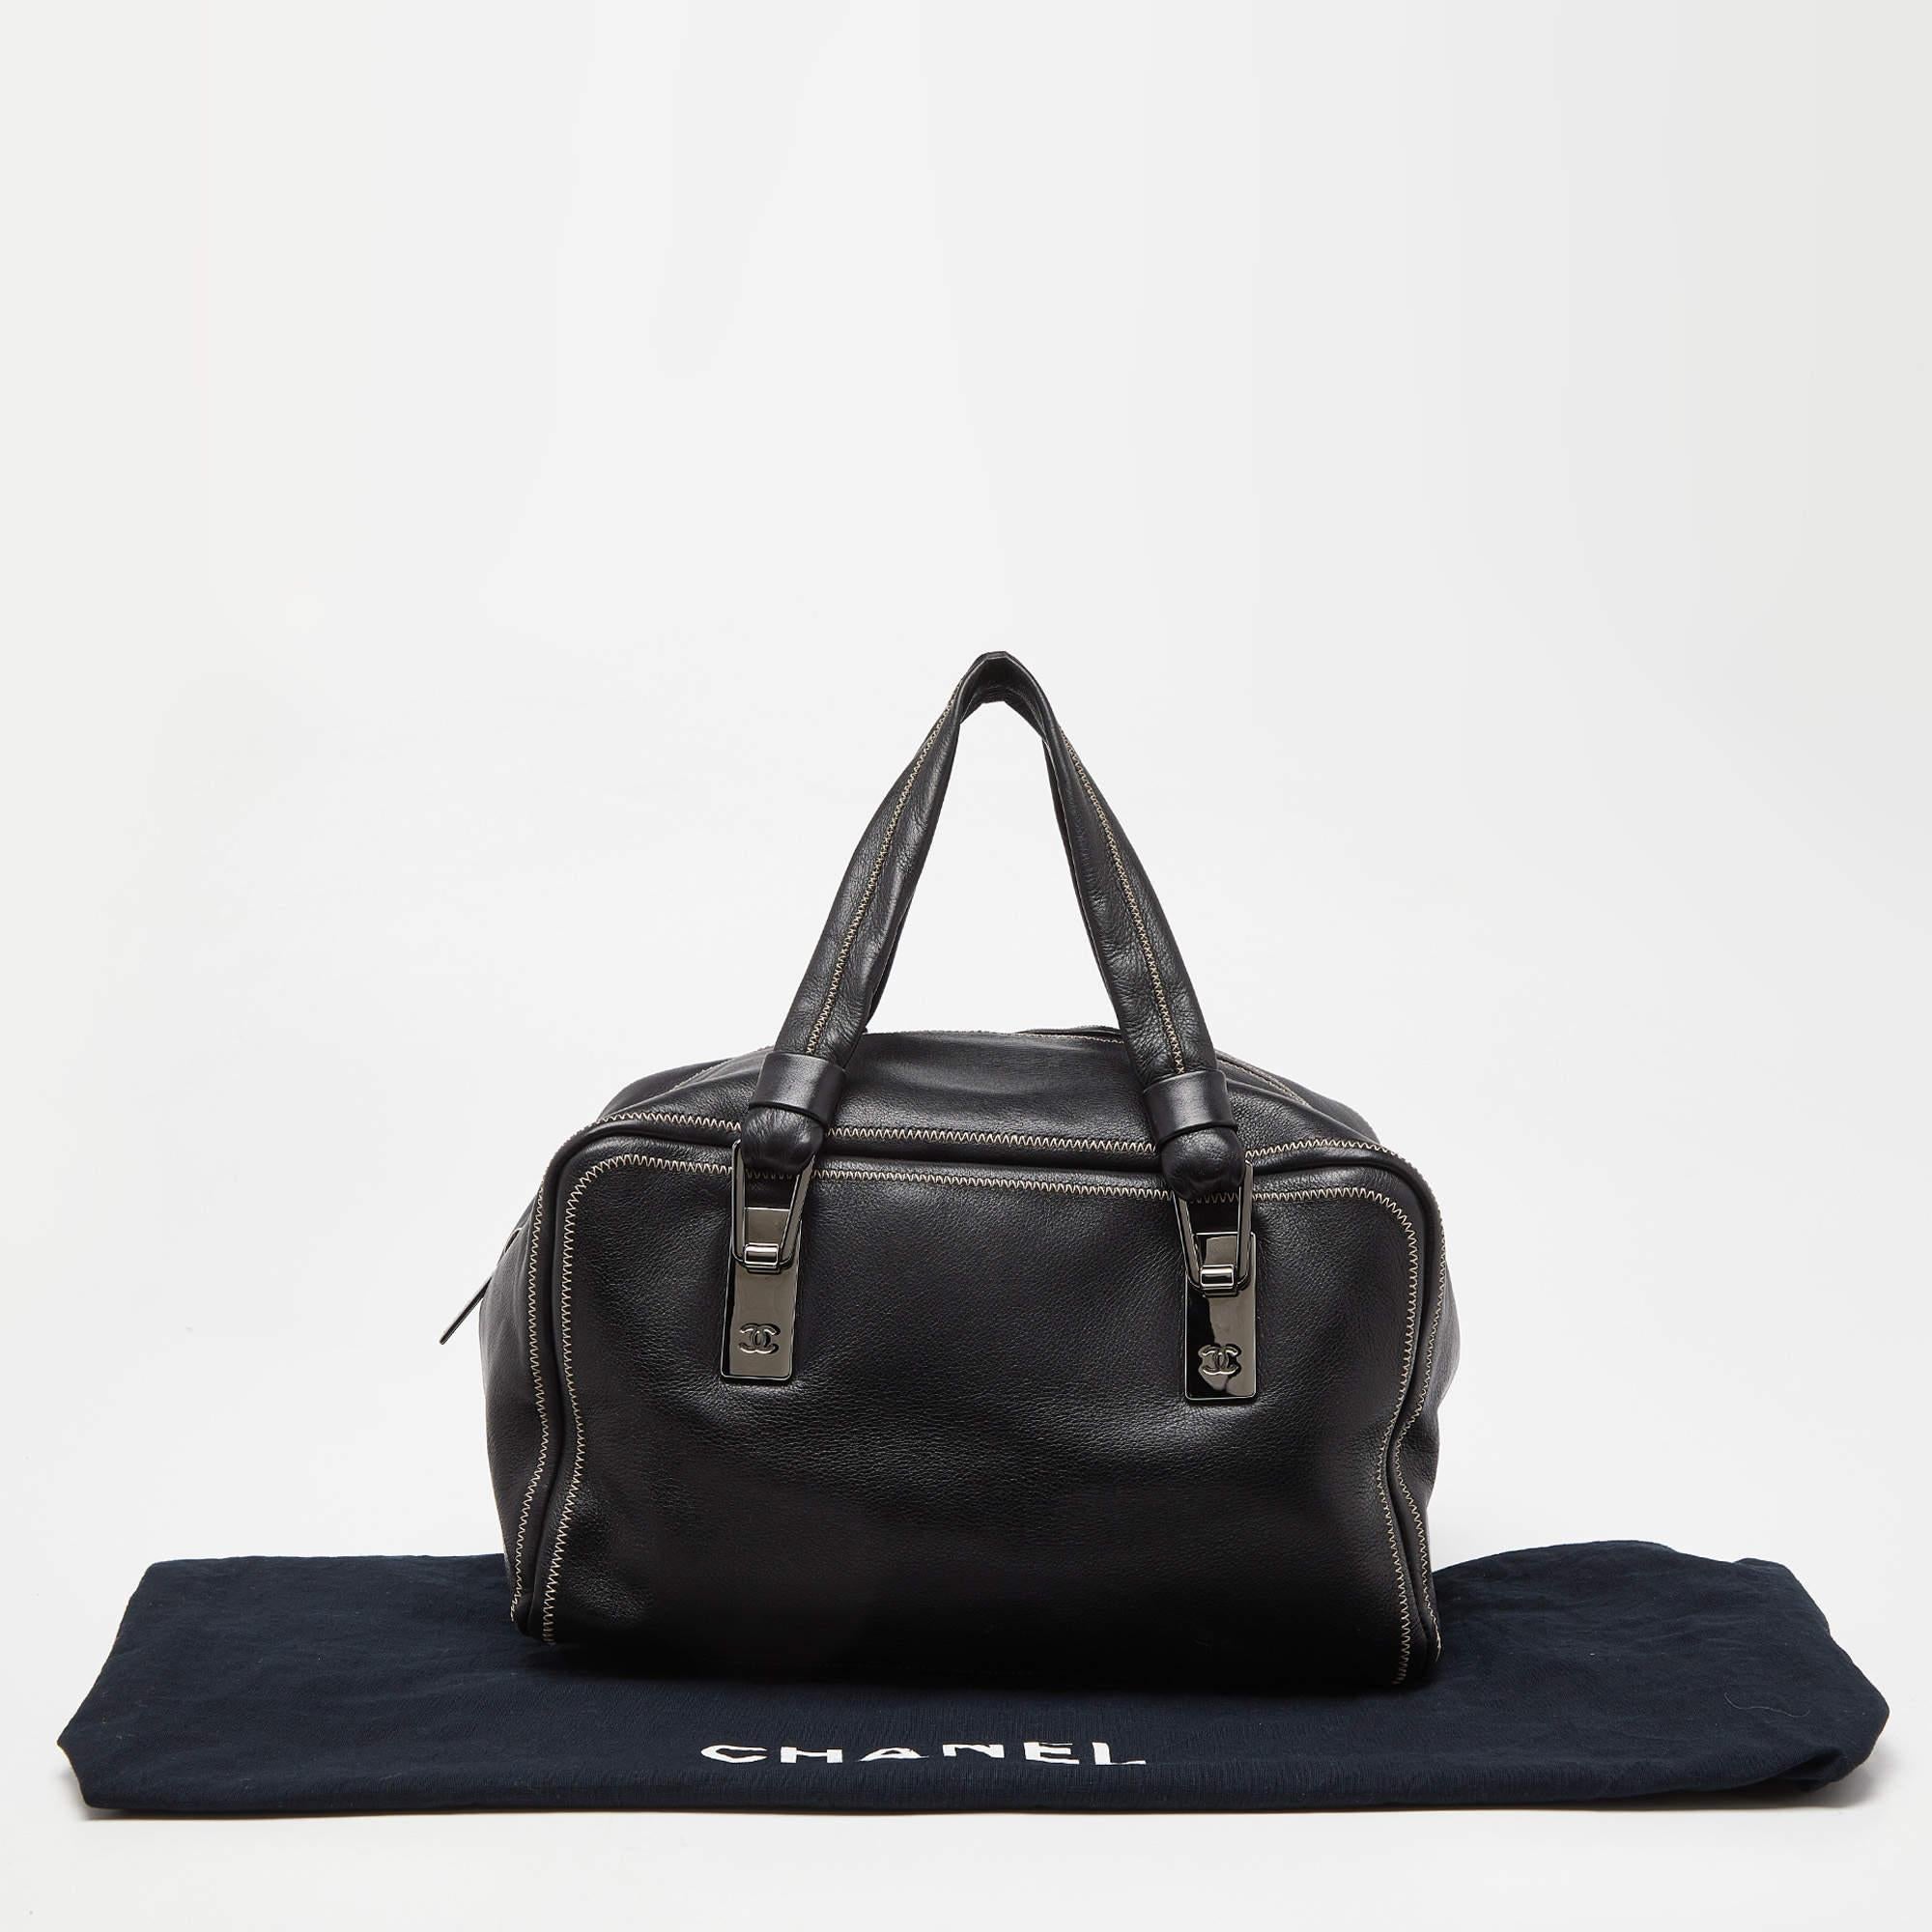 Chanel Black Leather CC Bowler Bag For Sale 5